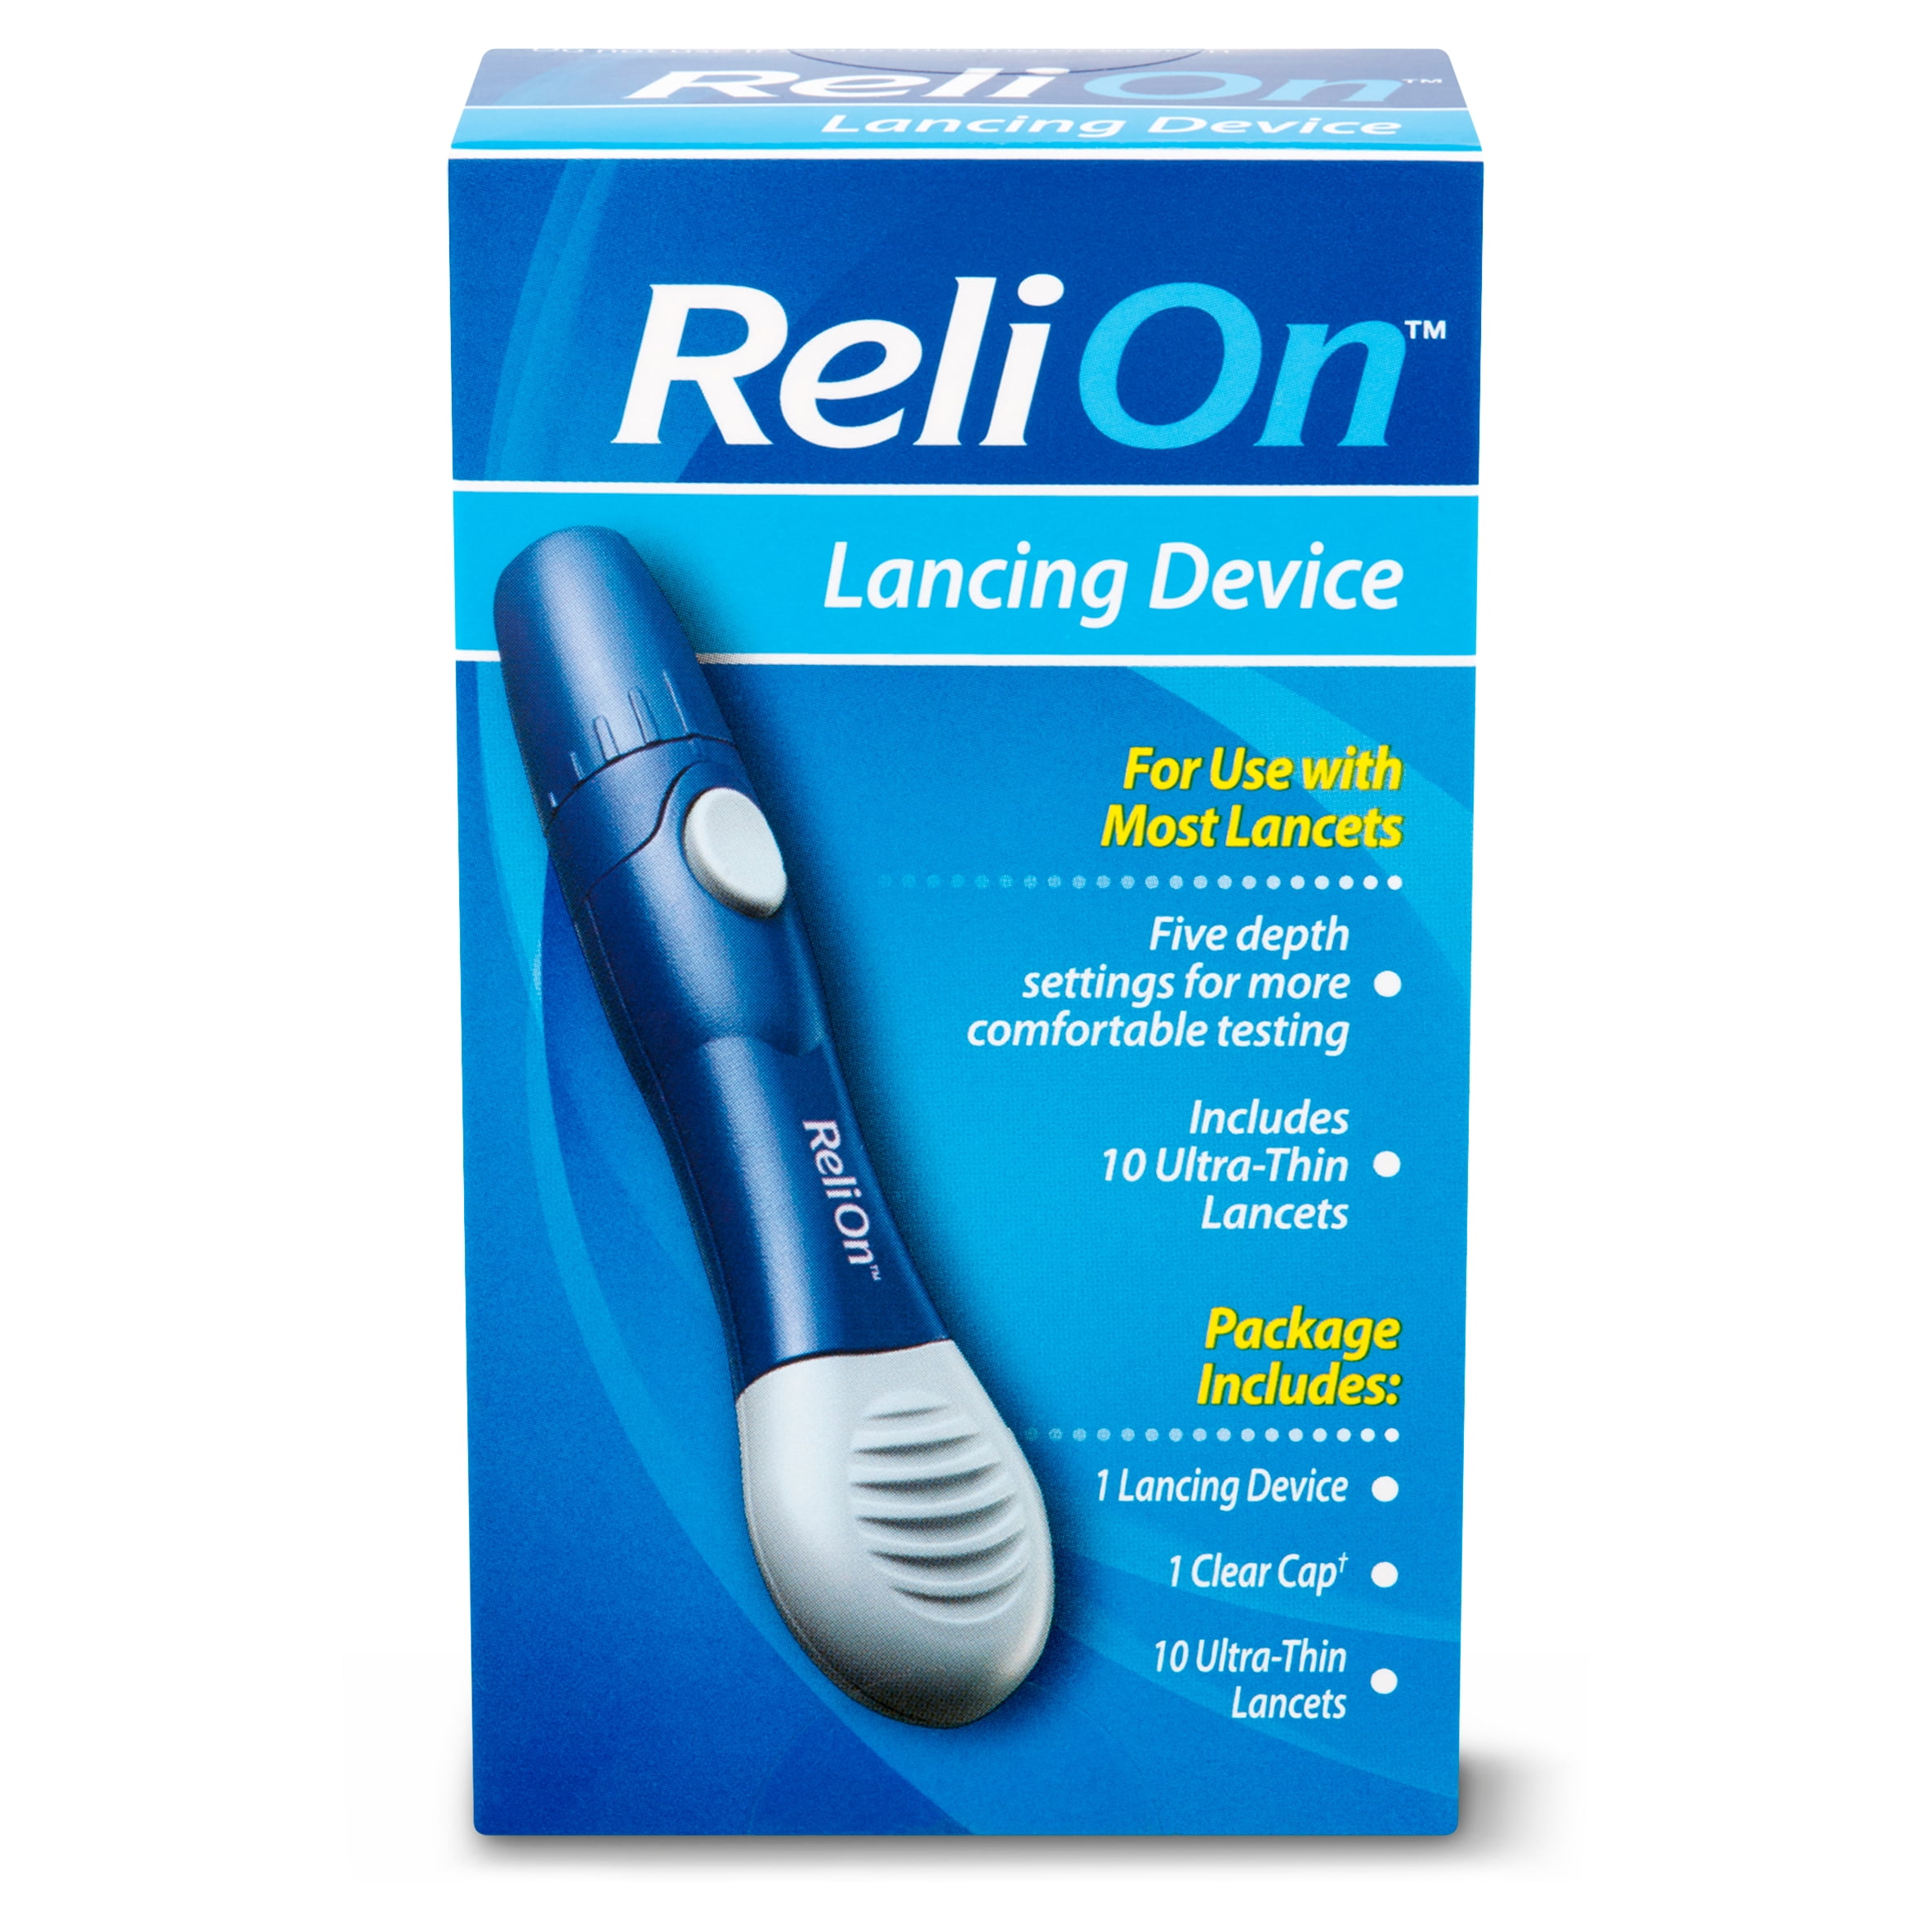 ReliOn Lancing Device - Walmart.com.